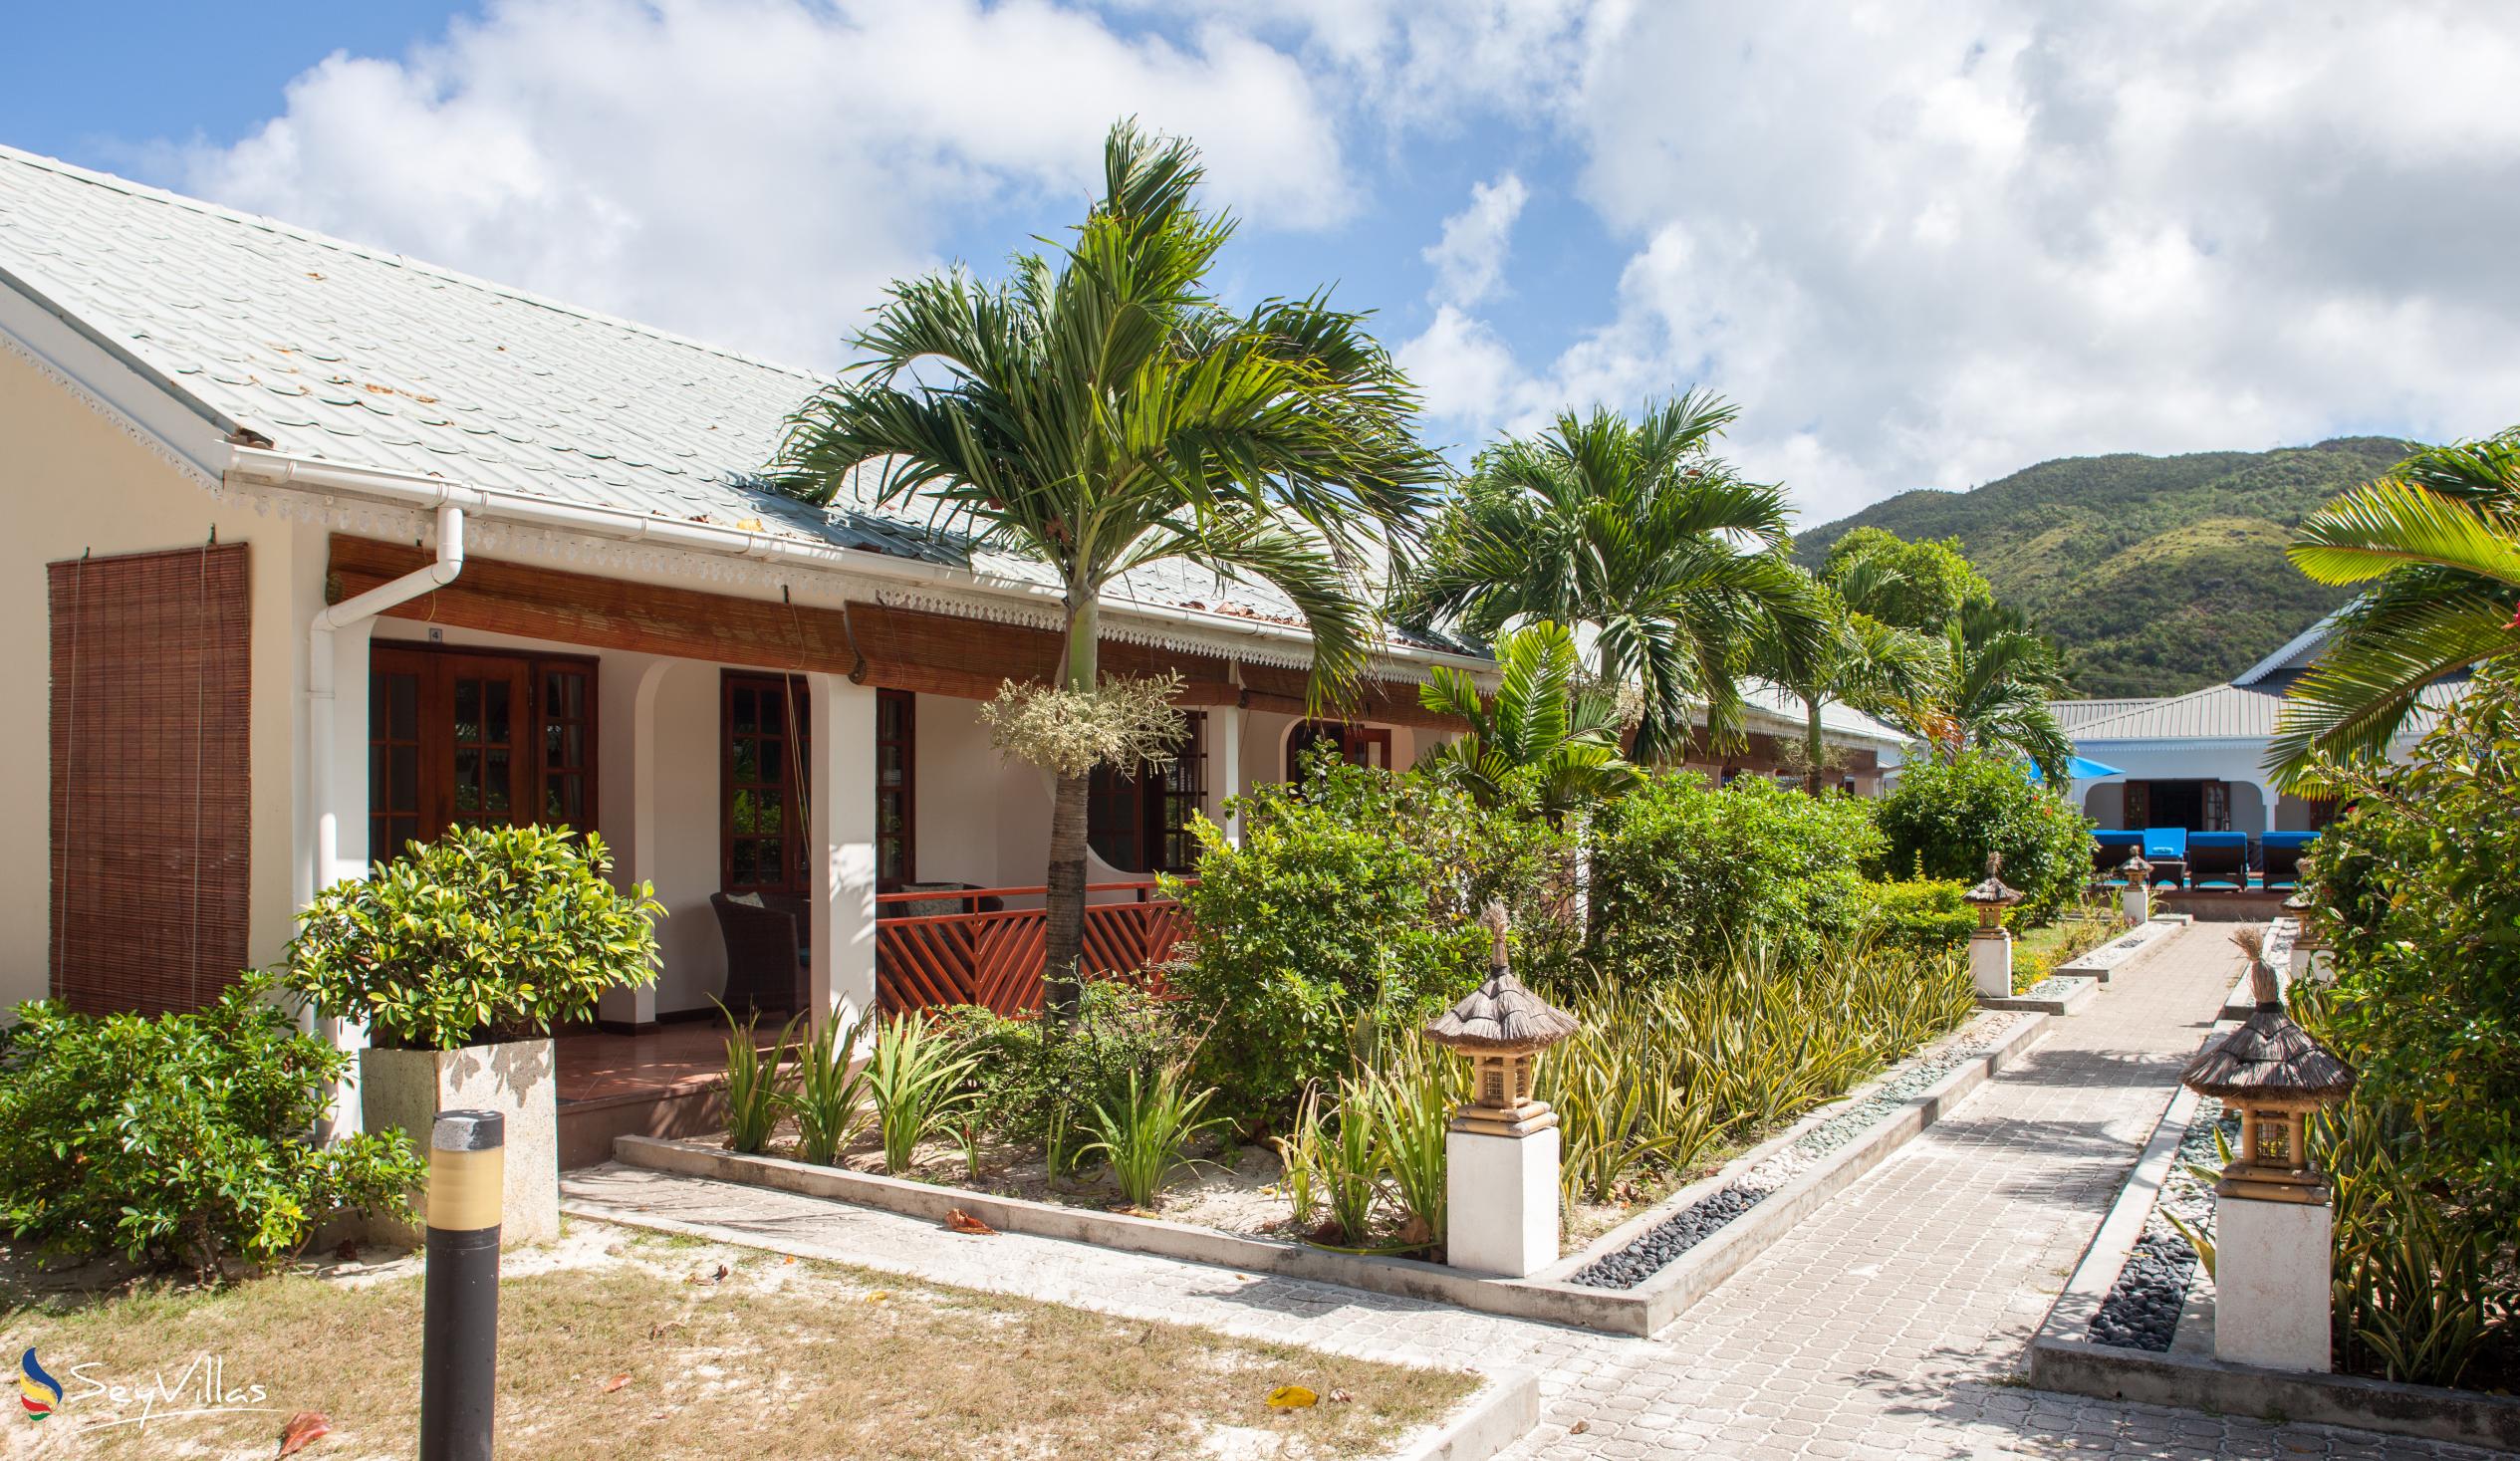 Foto 17: Villas de Mer - Aussenbereich - Praslin (Seychellen)